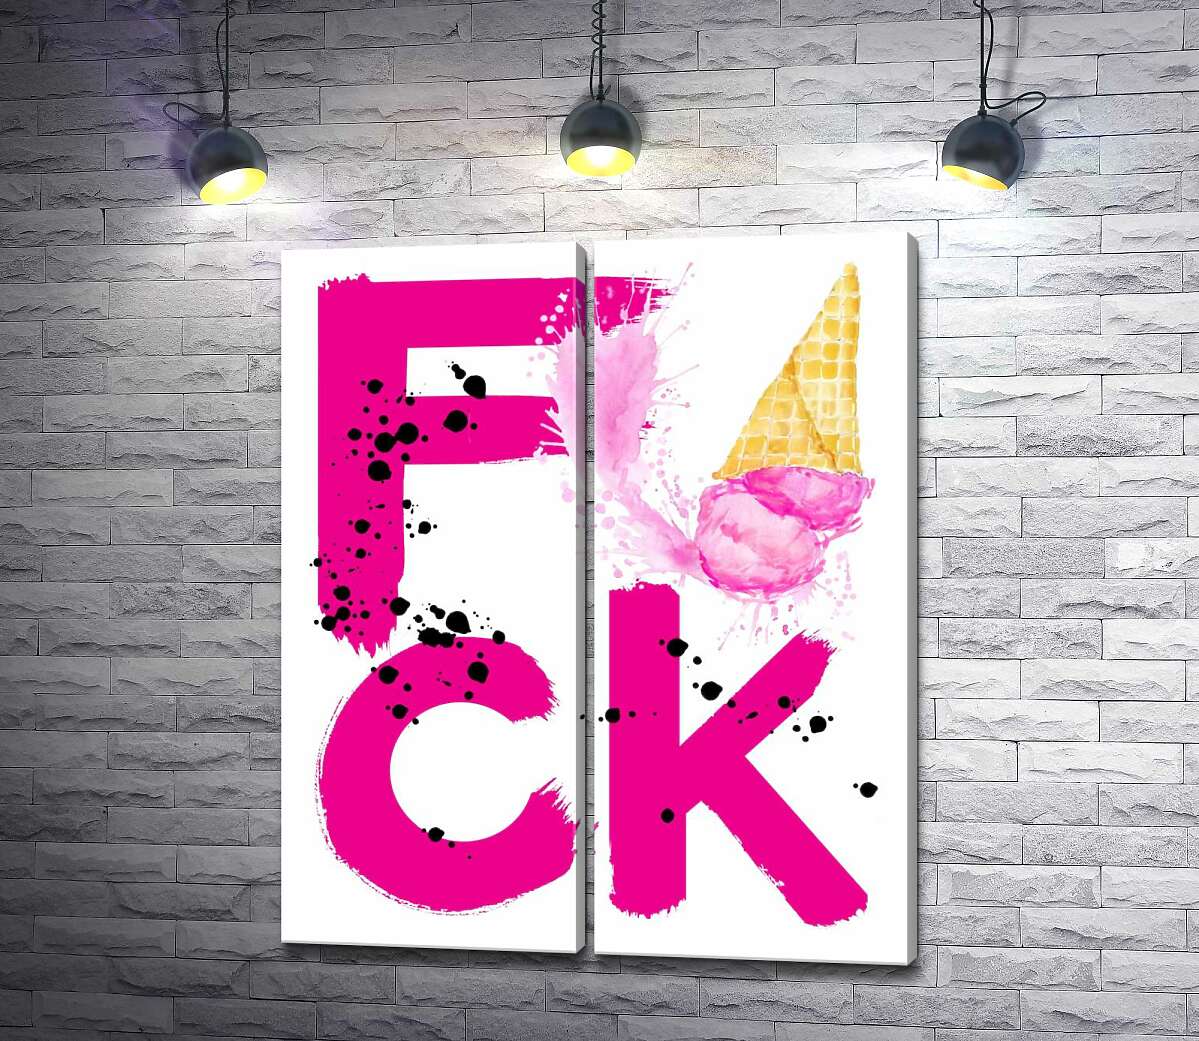 модульная картина Розовое слово "fuck" с рожком мороженого